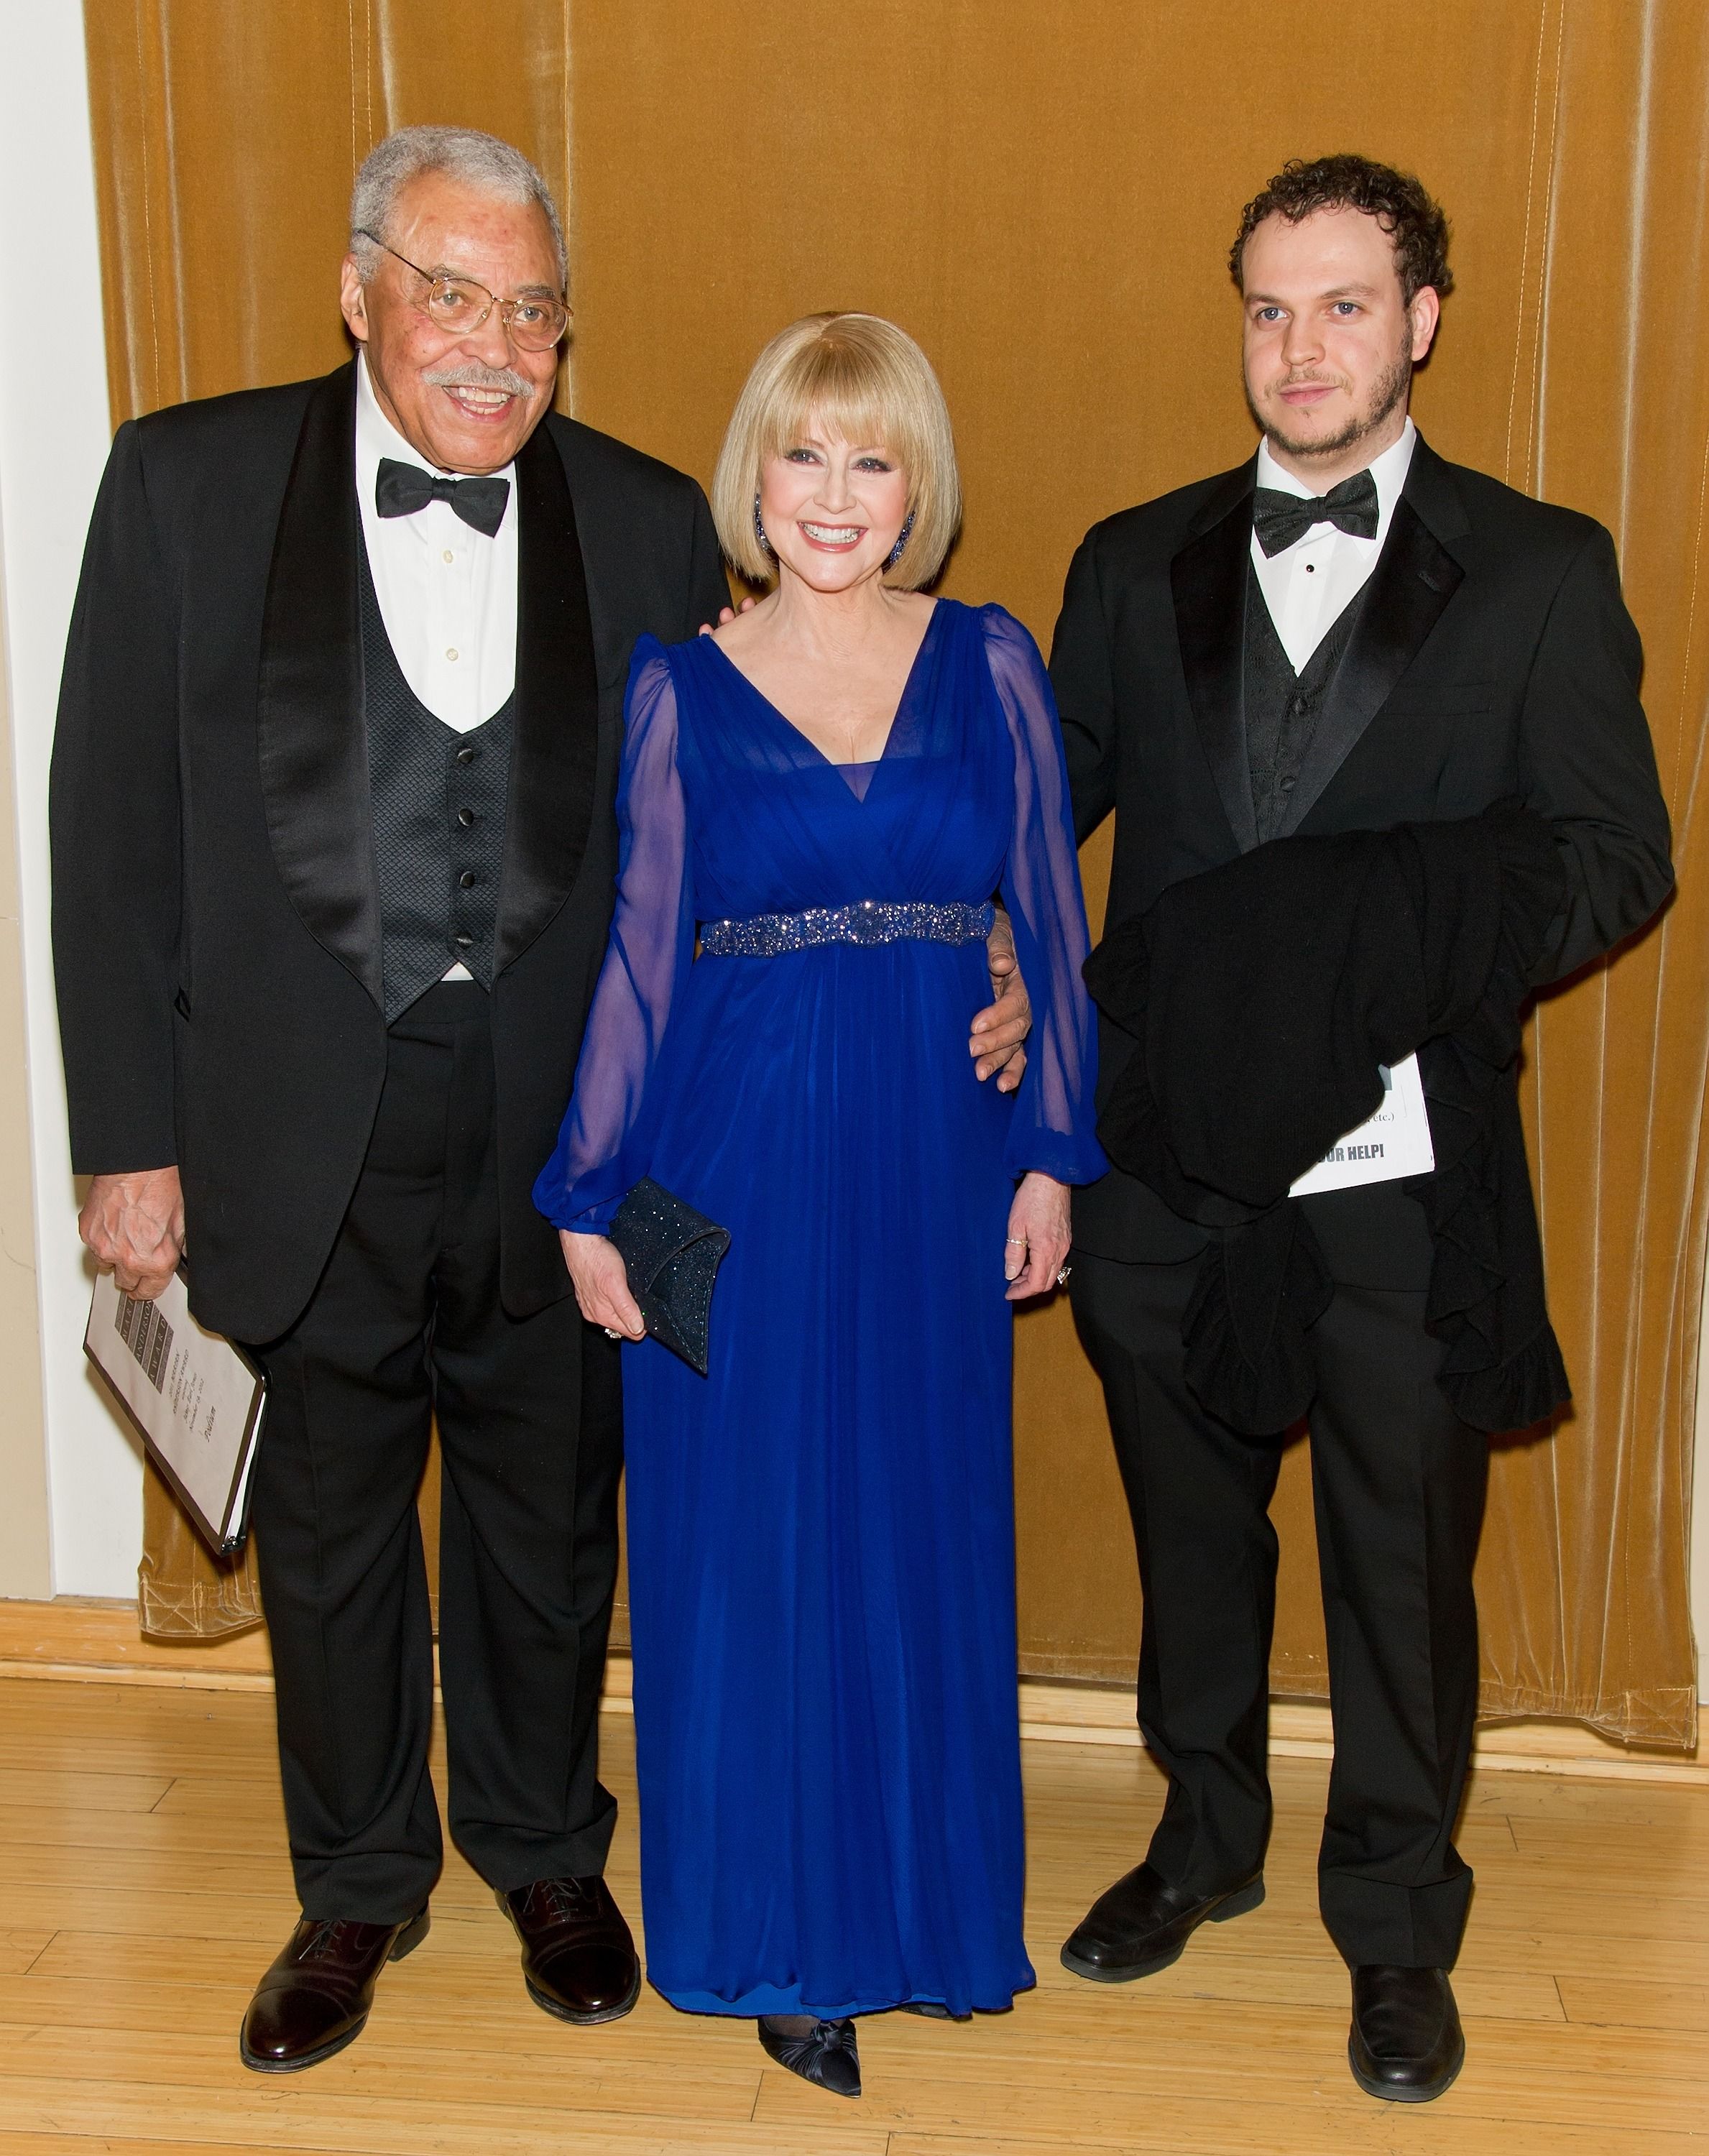 James Earl Jones, wife Cecelia Hart and son Flynn Earl Jones at the 2012 Marian Anderson awards gala in 2012 in Philadelphia, Pennsylvania | Source: Getty Images